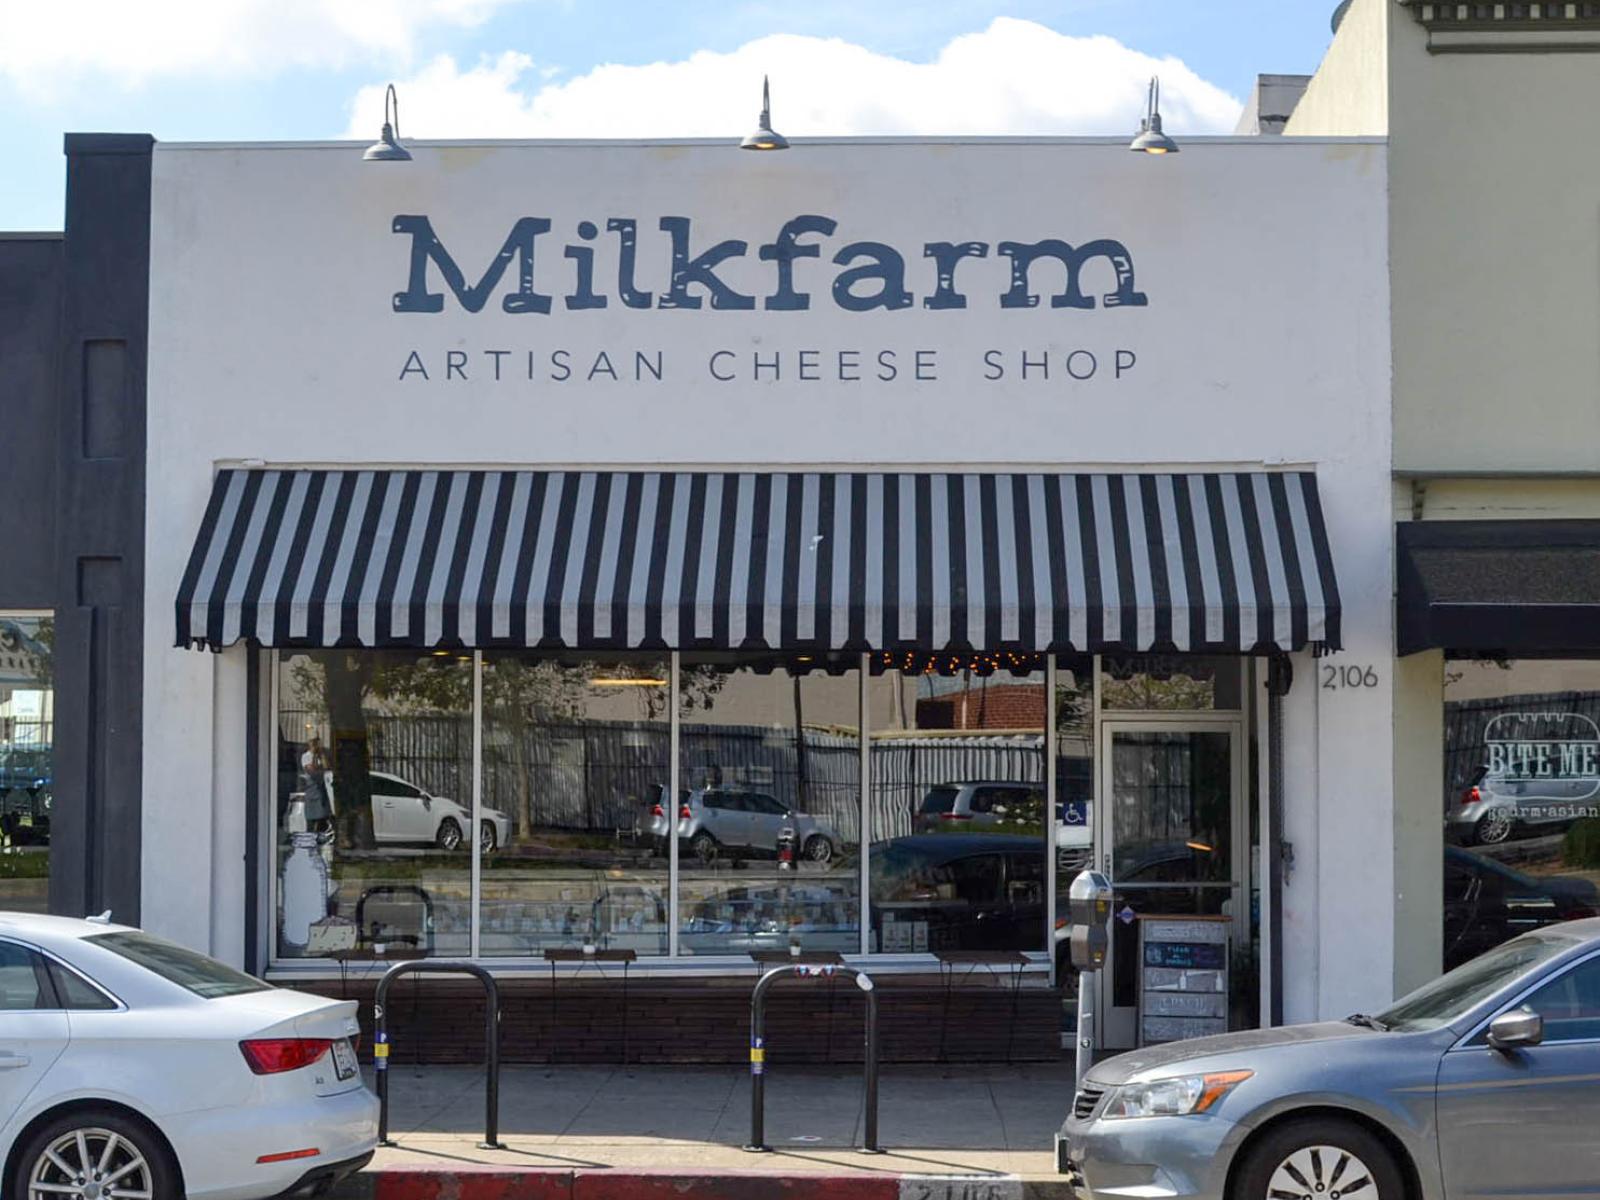 Main image for business titled Milkfarm Artisan Cheese Shop